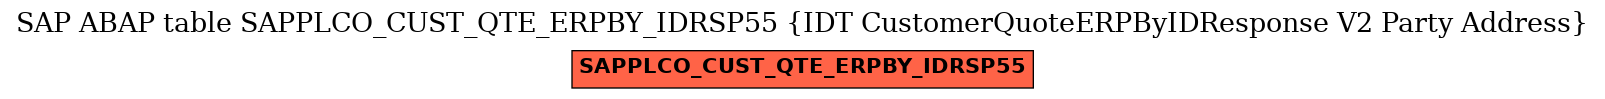 E-R Diagram for table SAPPLCO_CUST_QTE_ERPBY_IDRSP55 (IDT CustomerQuoteERPByIDResponse V2 Party Address)